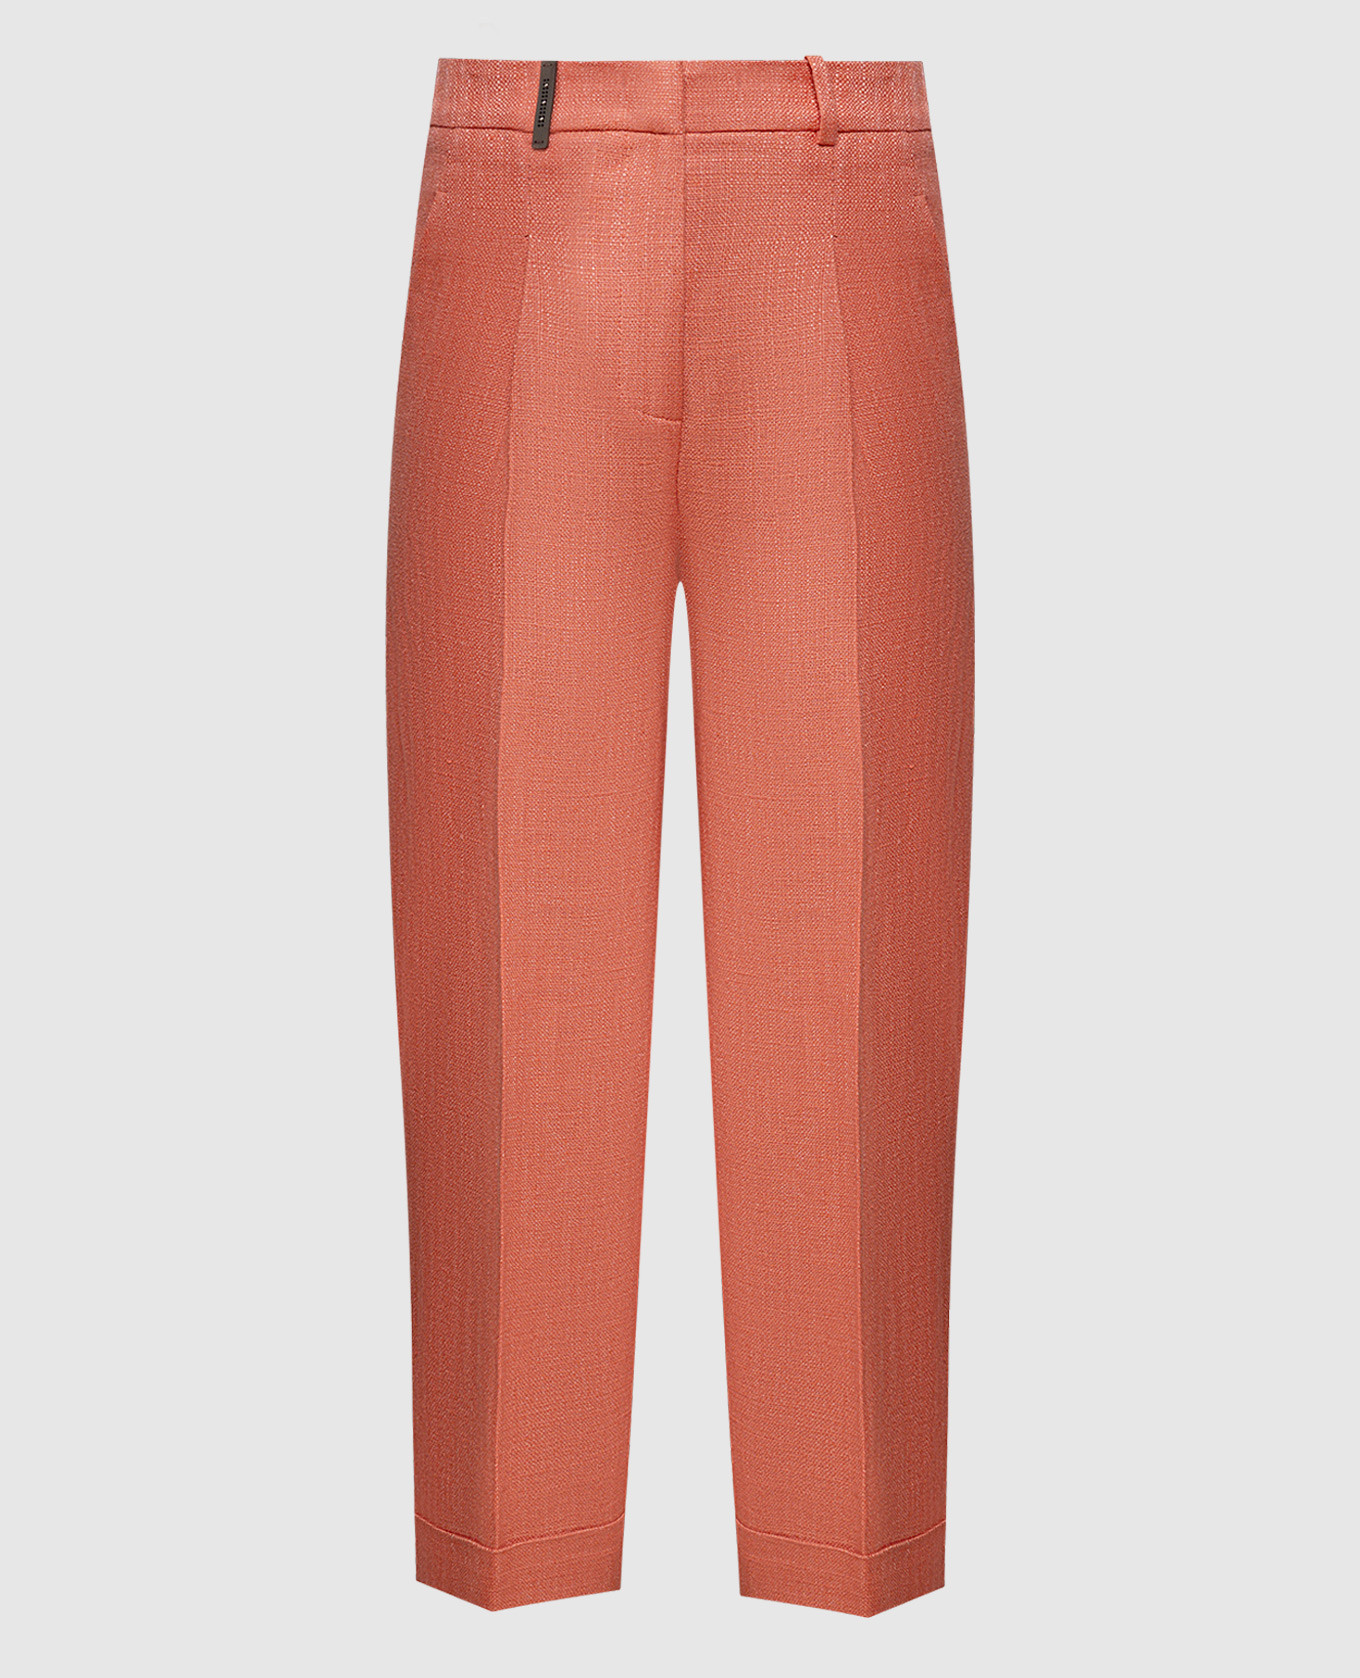 Orange pants with linen